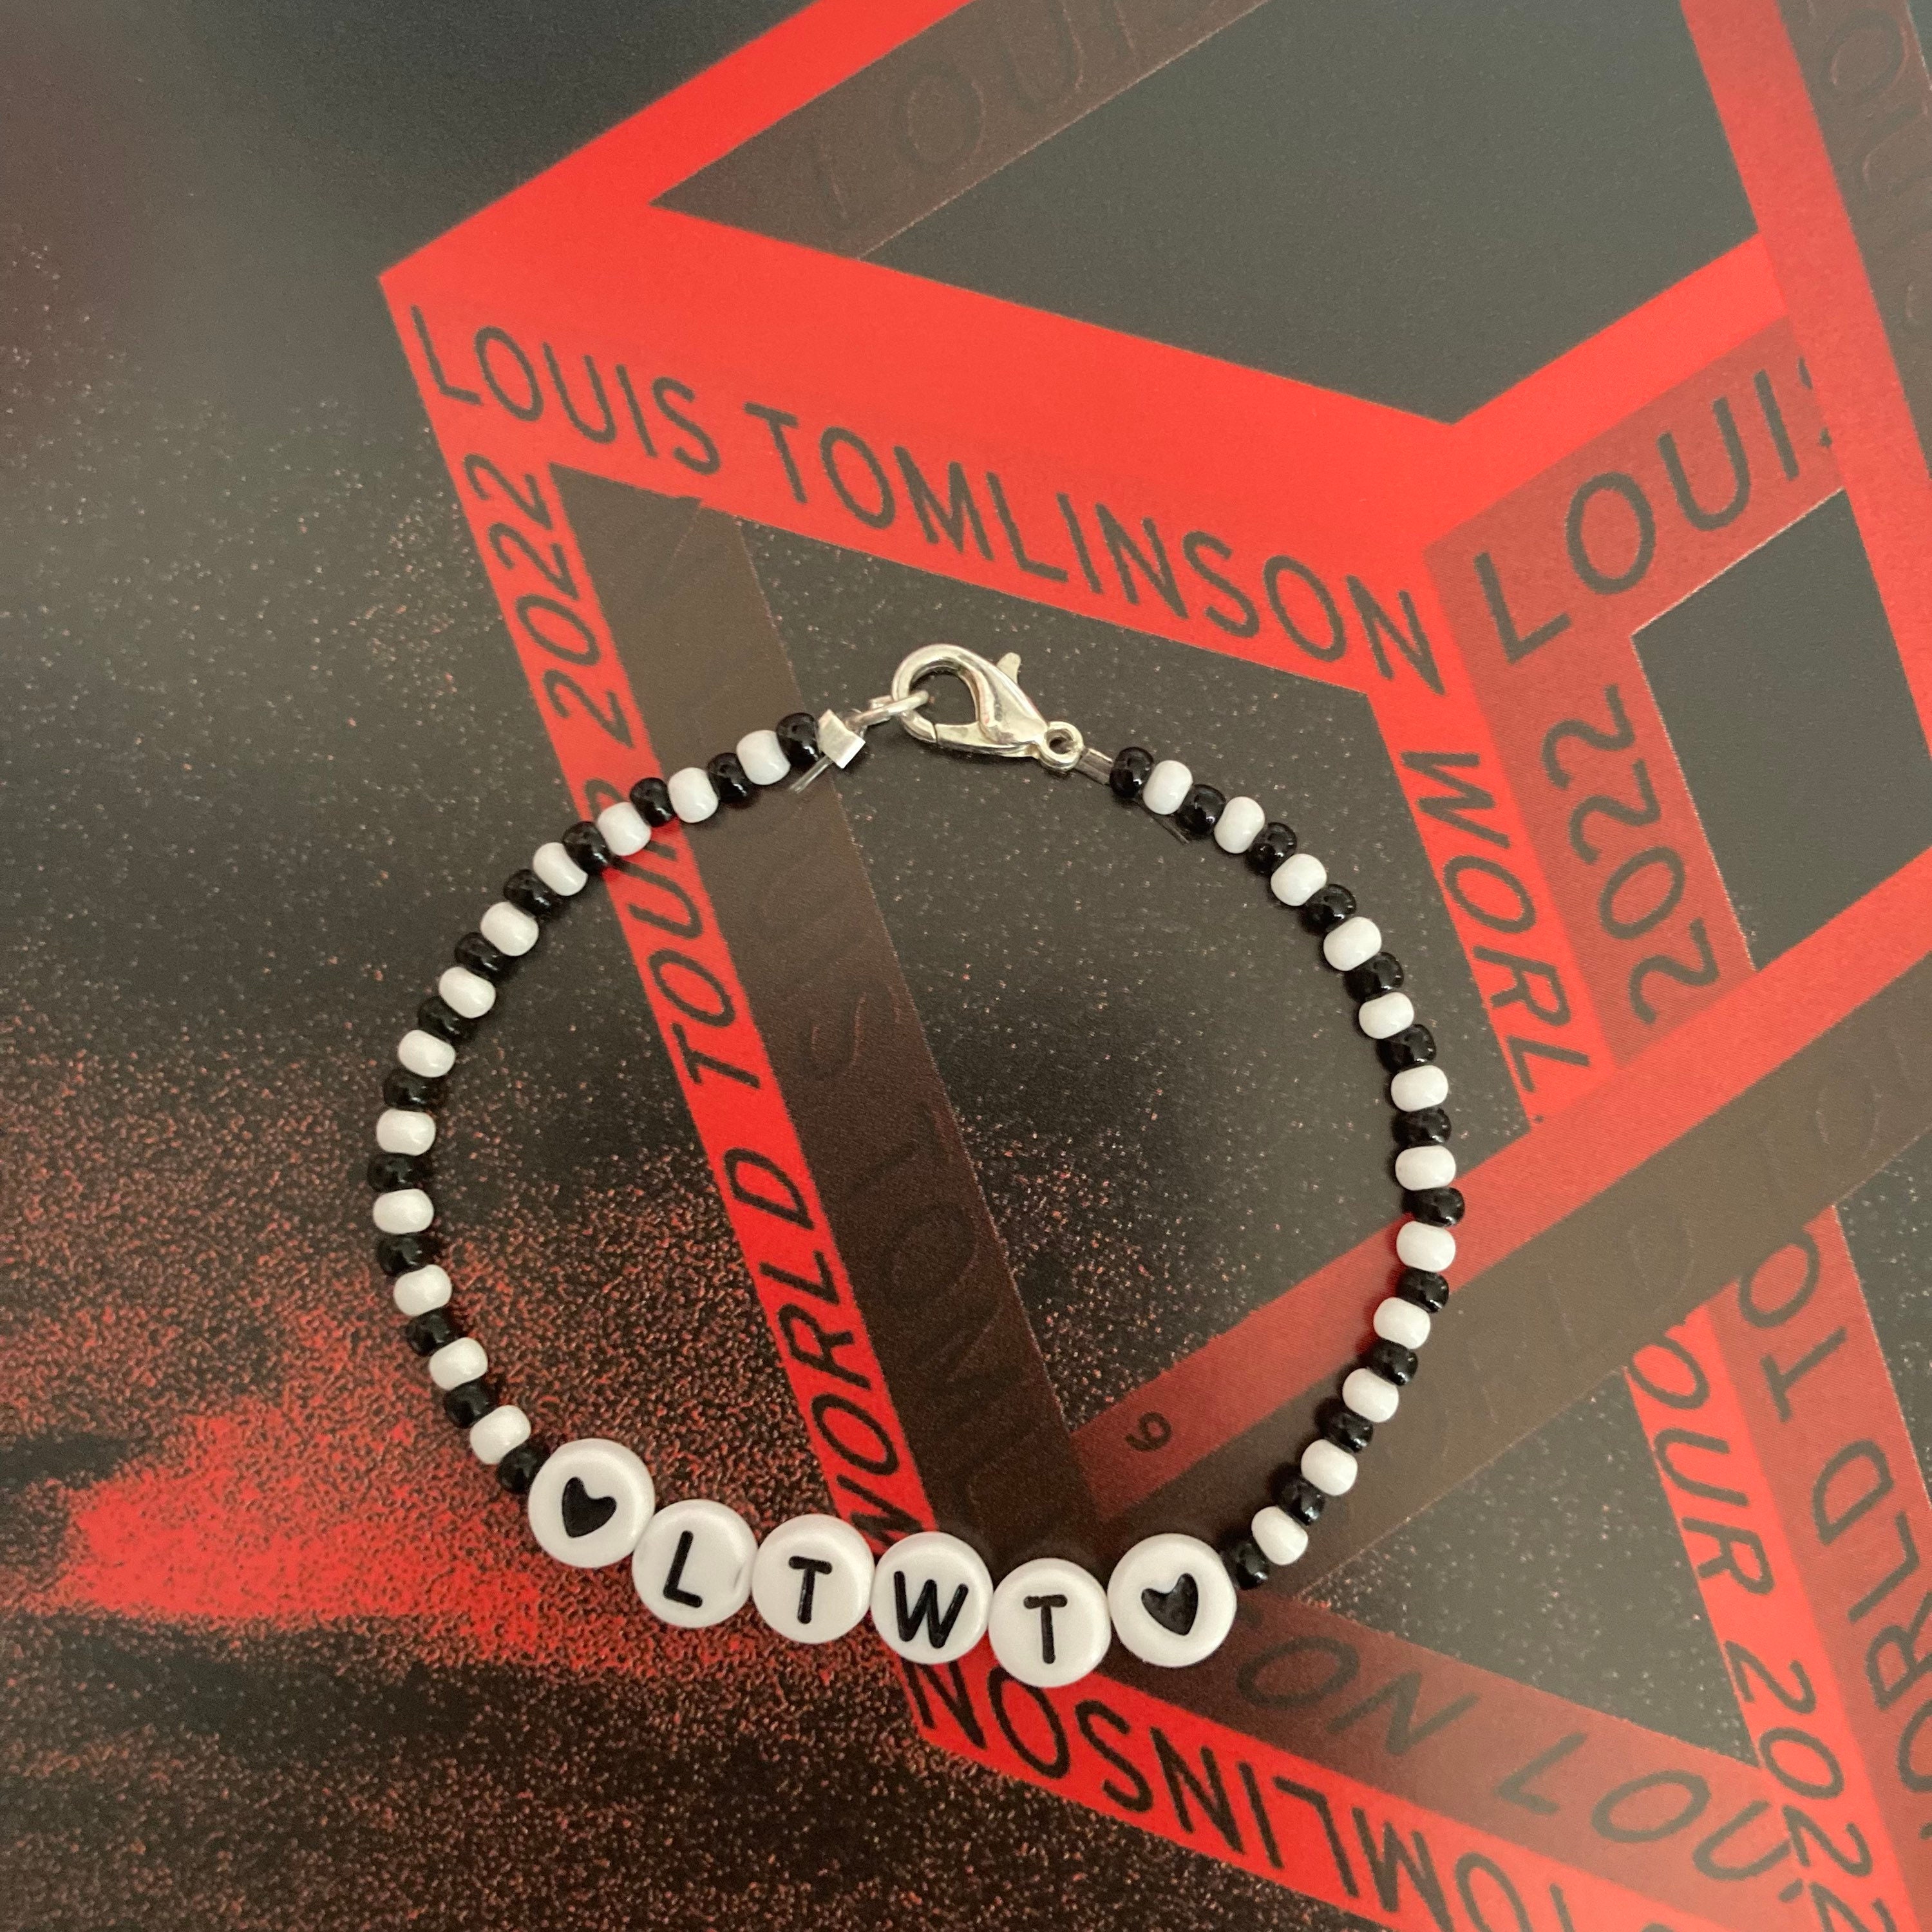 Louis Tomlinson Inspired Bracelets